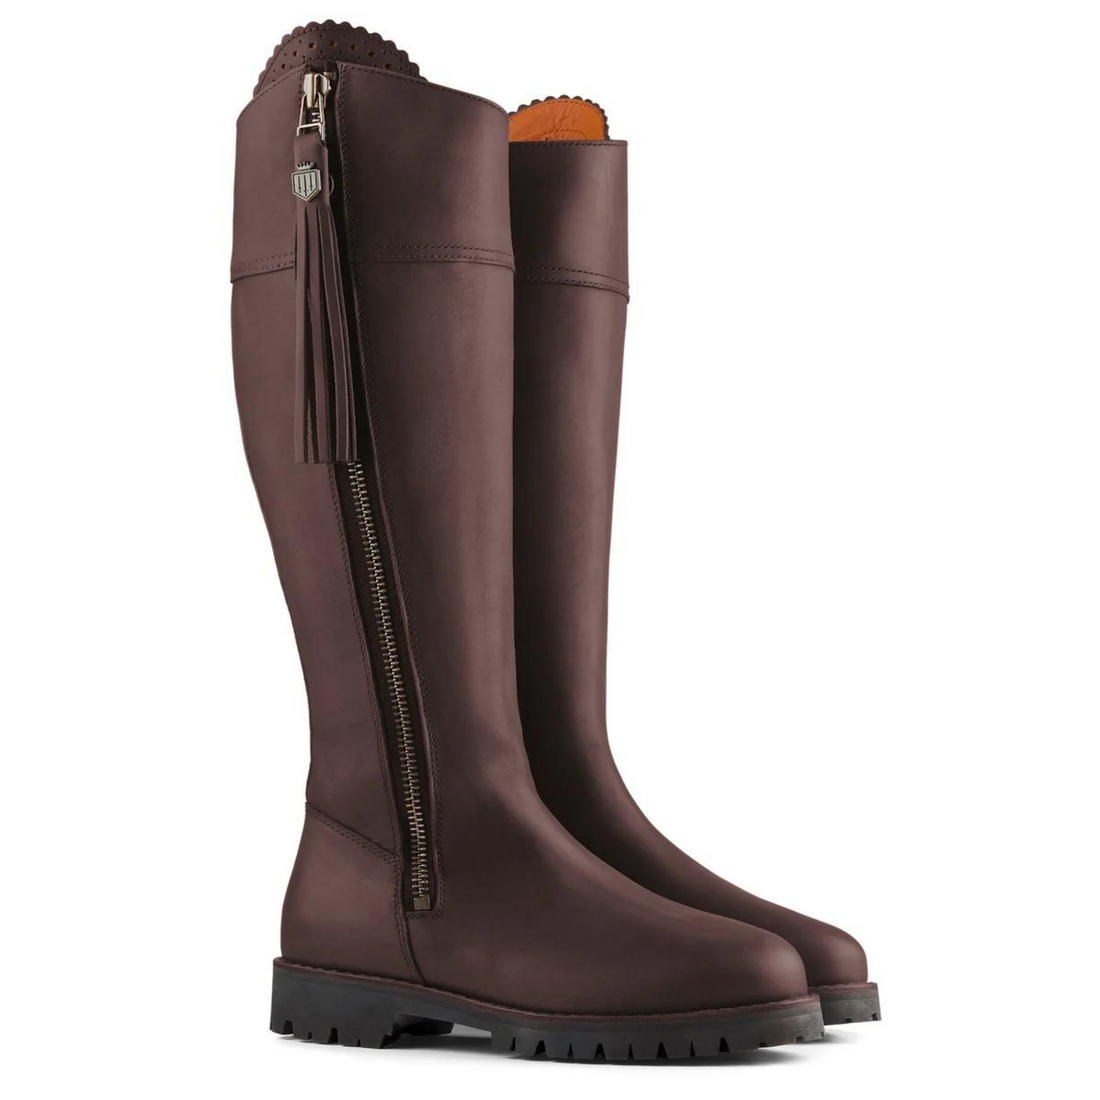 Winter Boots – Wild & Westbrooke